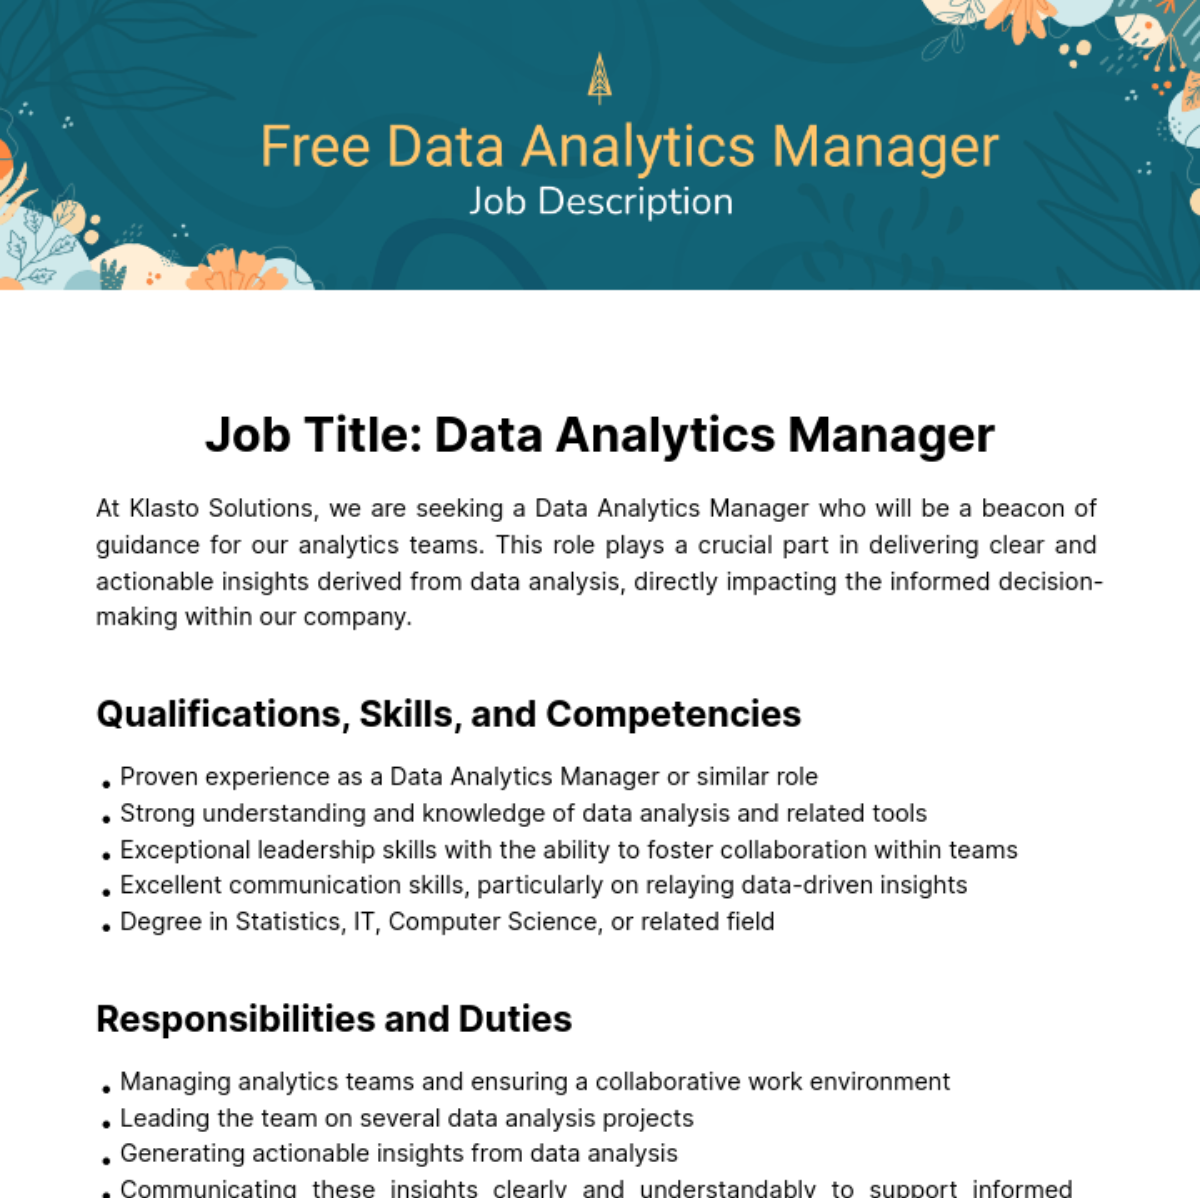 Free Data Analytics Manager Job Description Template